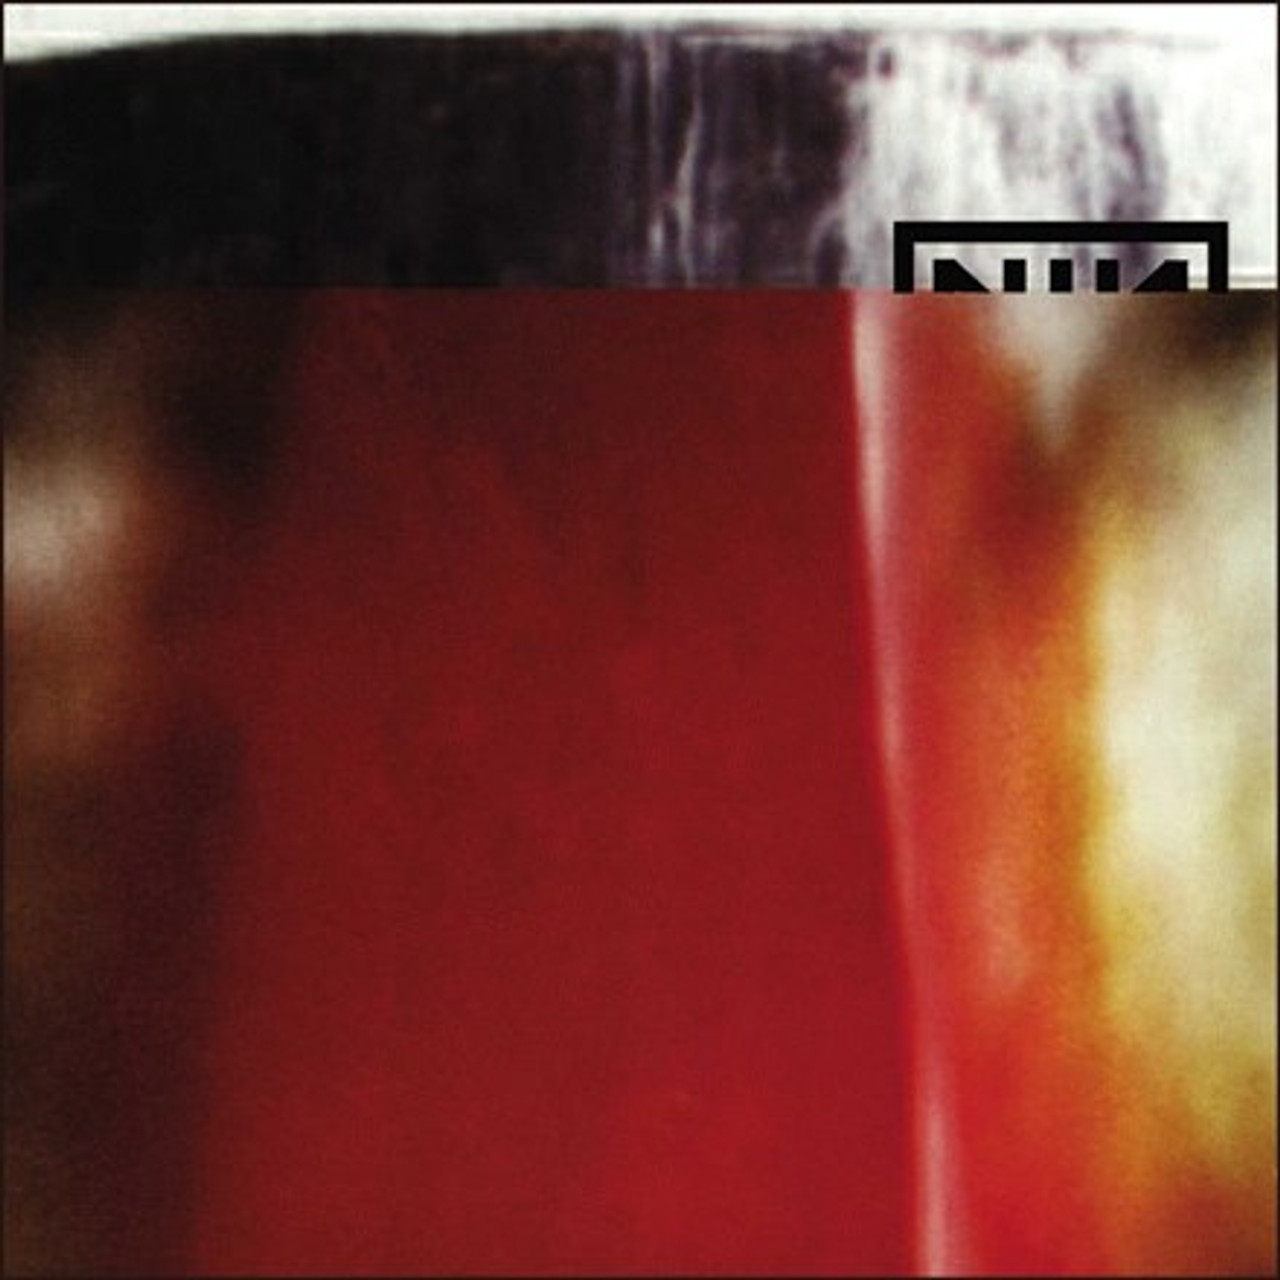 USA Streng Modig Nine Inch Nails - The Fragile (180g Vinyl 3LP) * * * - Music Direct